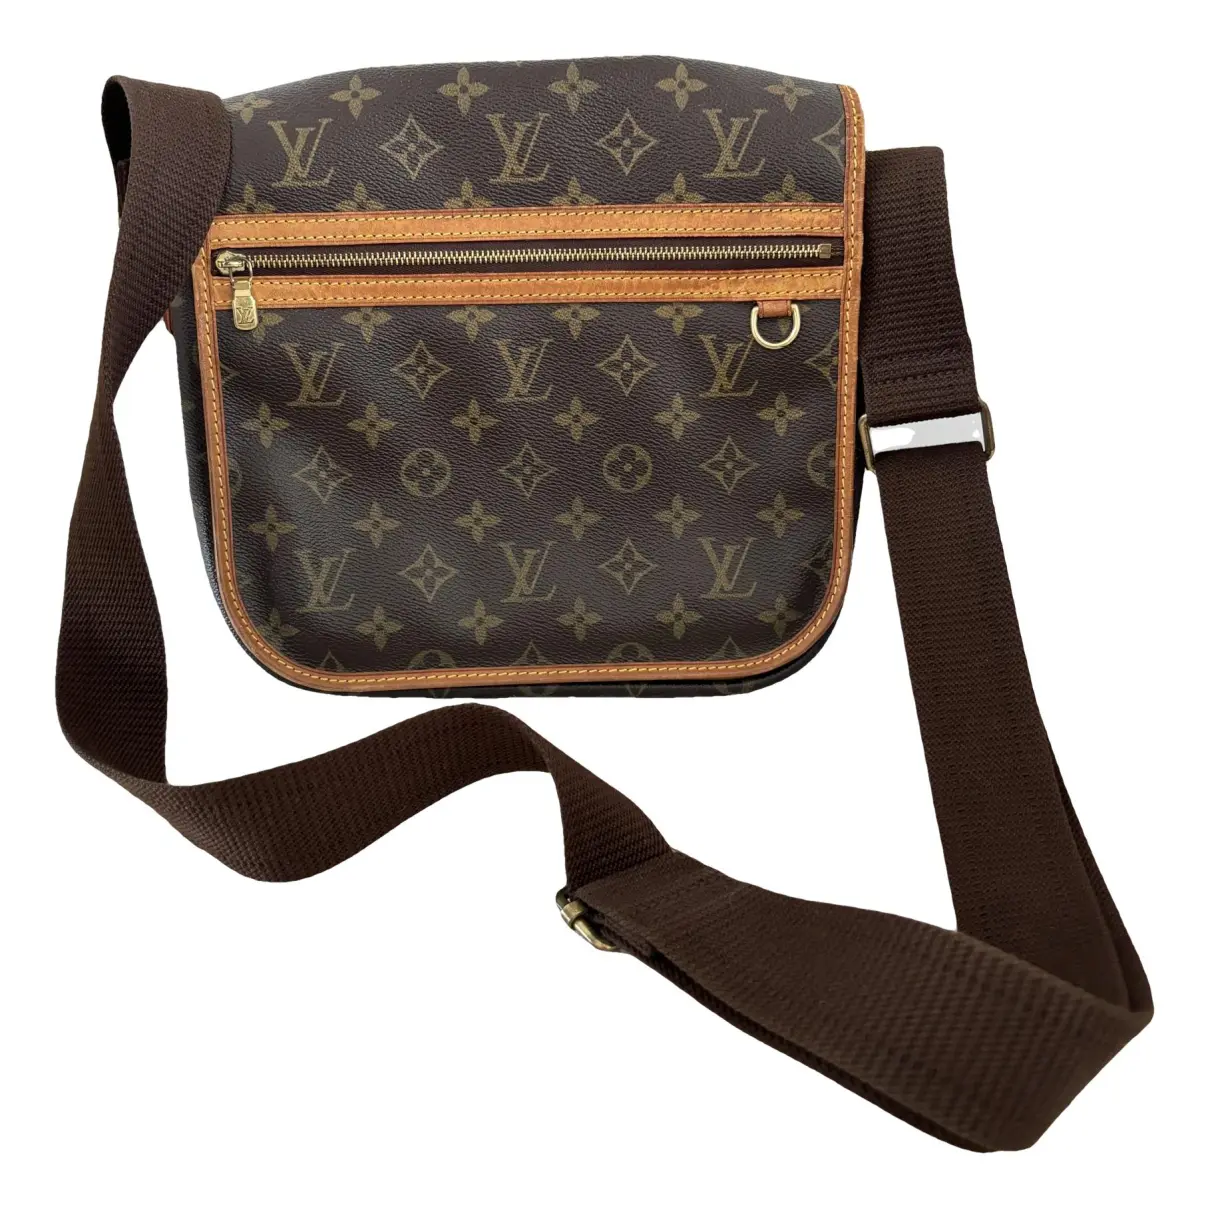 Bosphore leather handbag